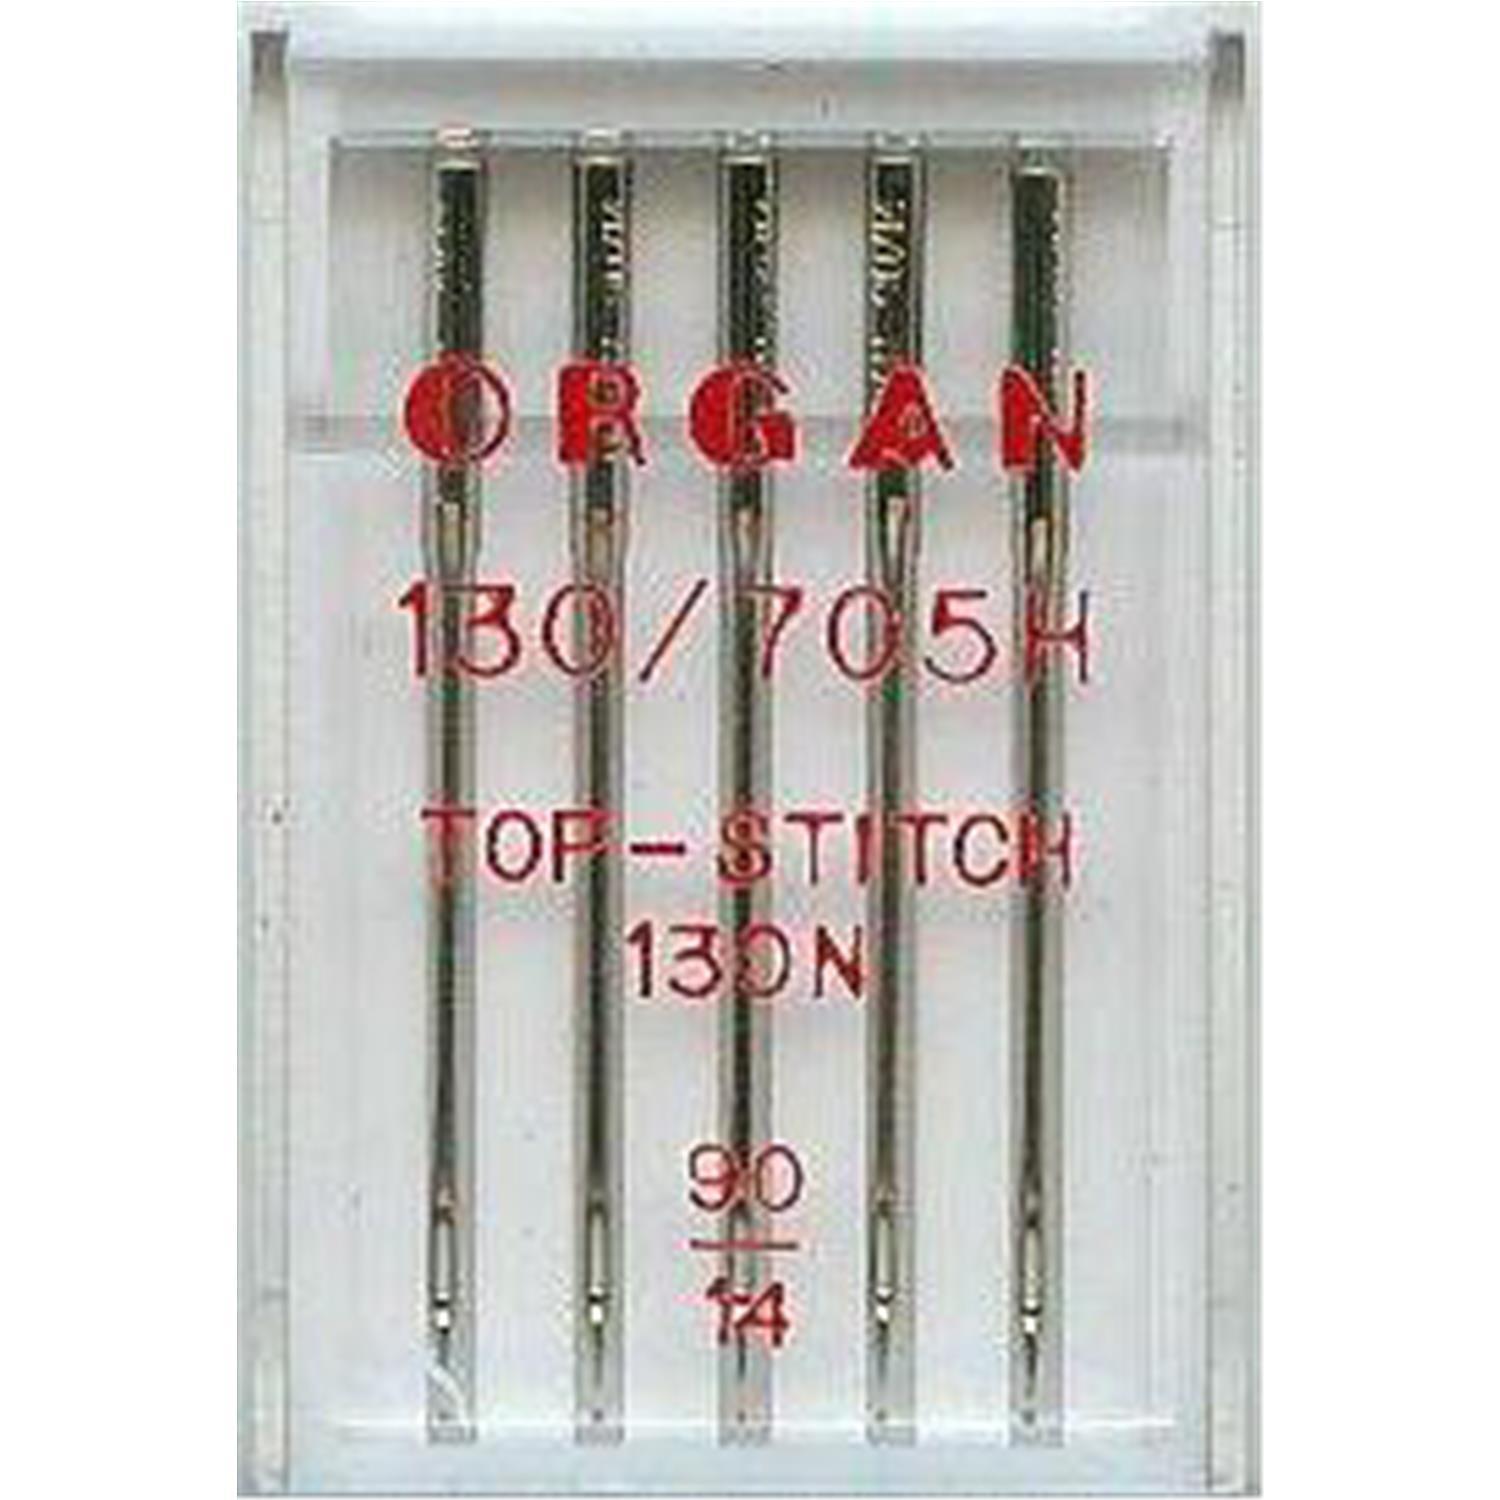 Nähmaschinennadeln Organ, Top-Stitch/130N, Stärke 90 #125